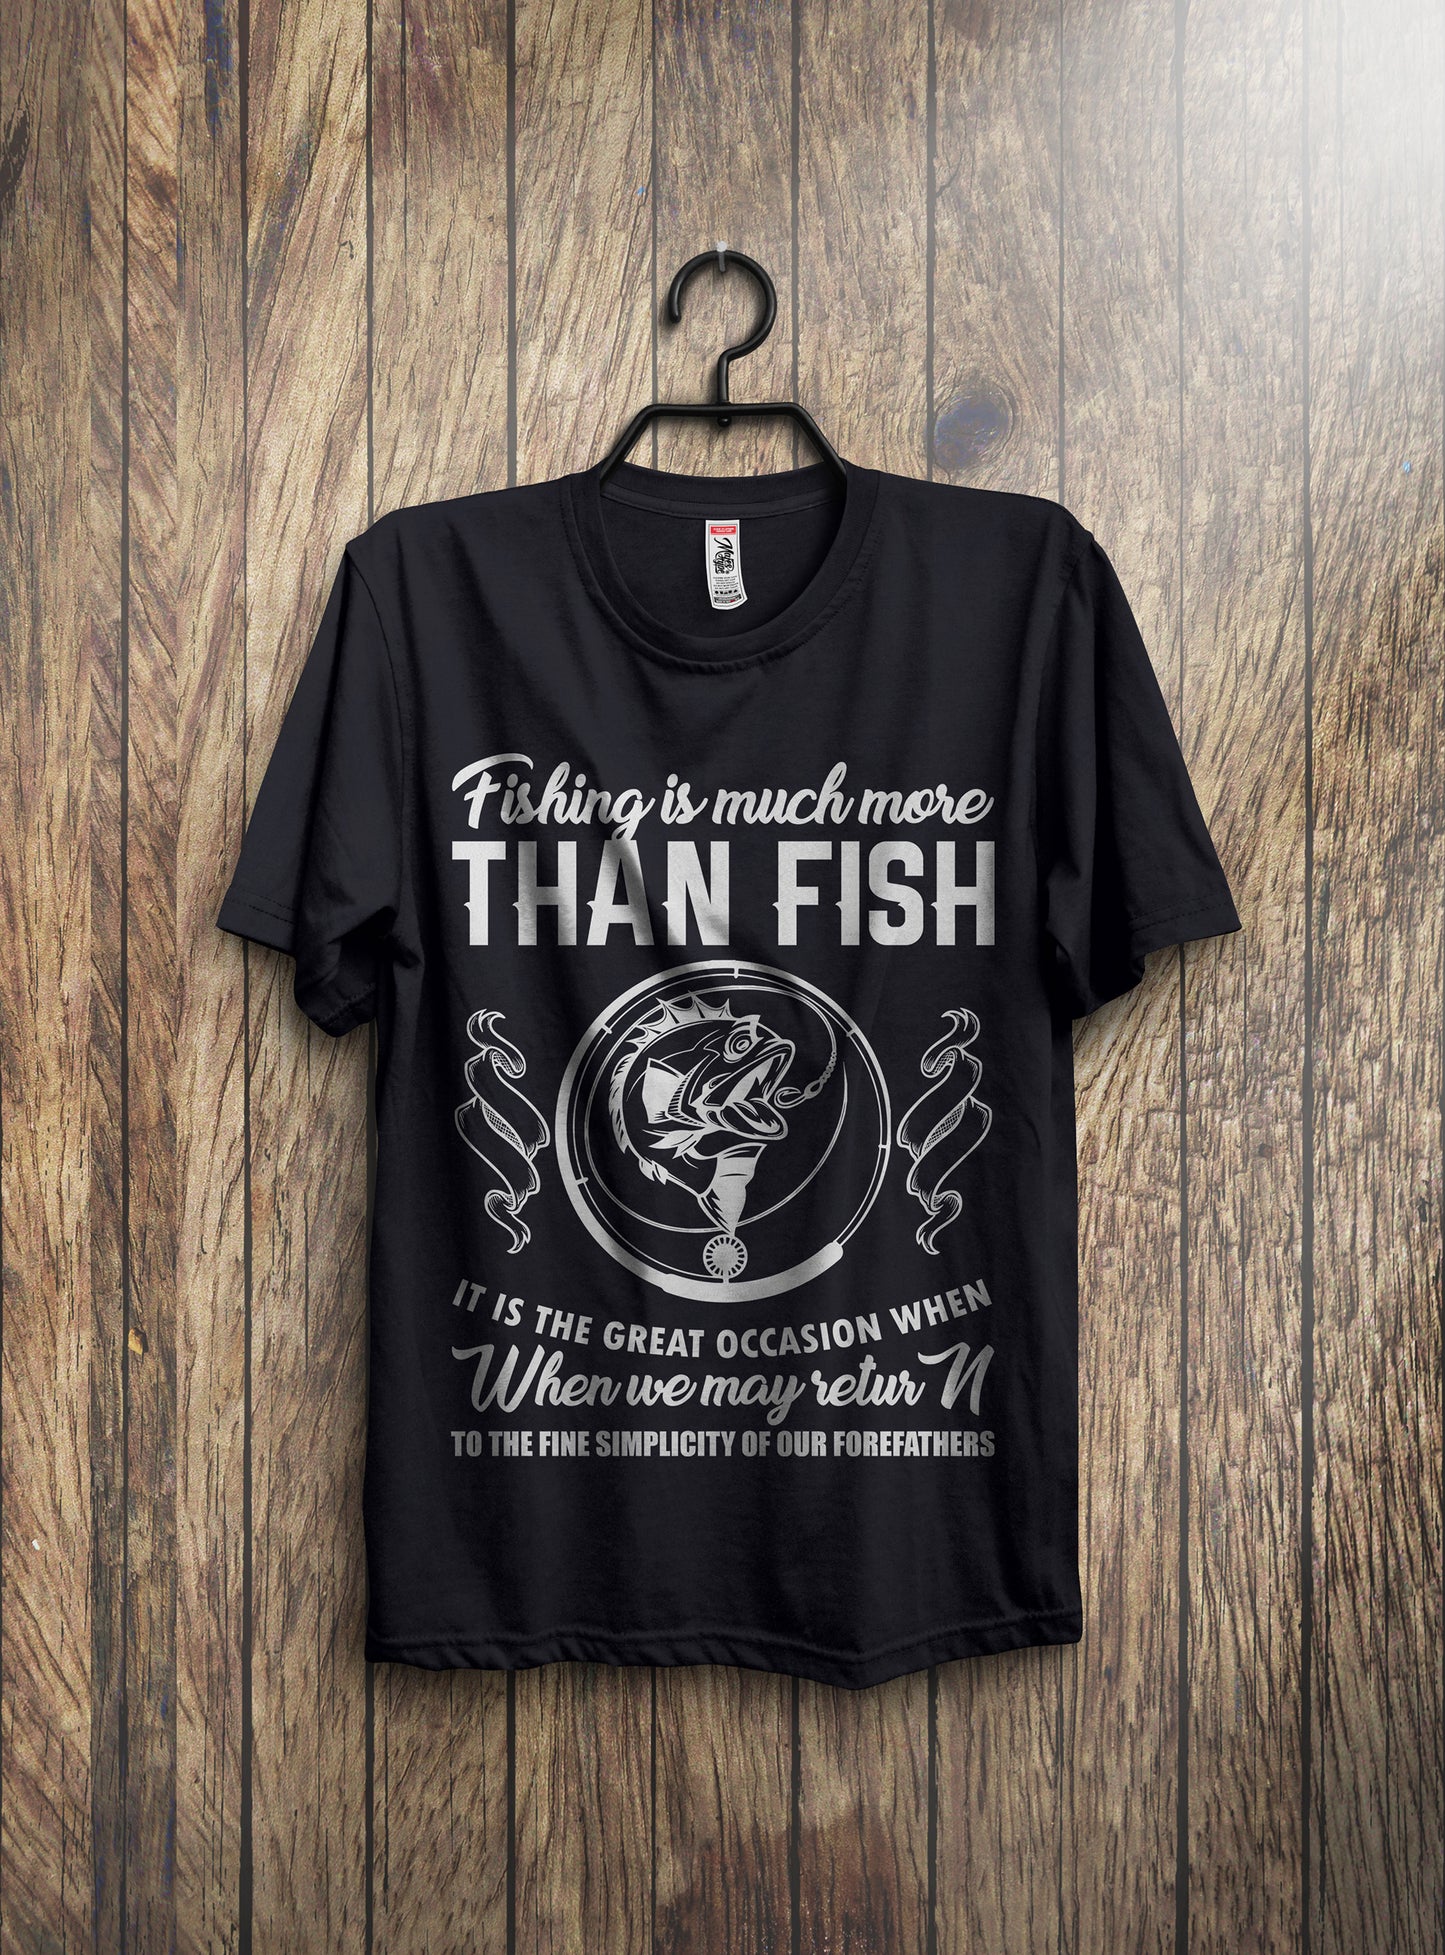 Fishing T-Shirts Design Bundle With Free Mockup